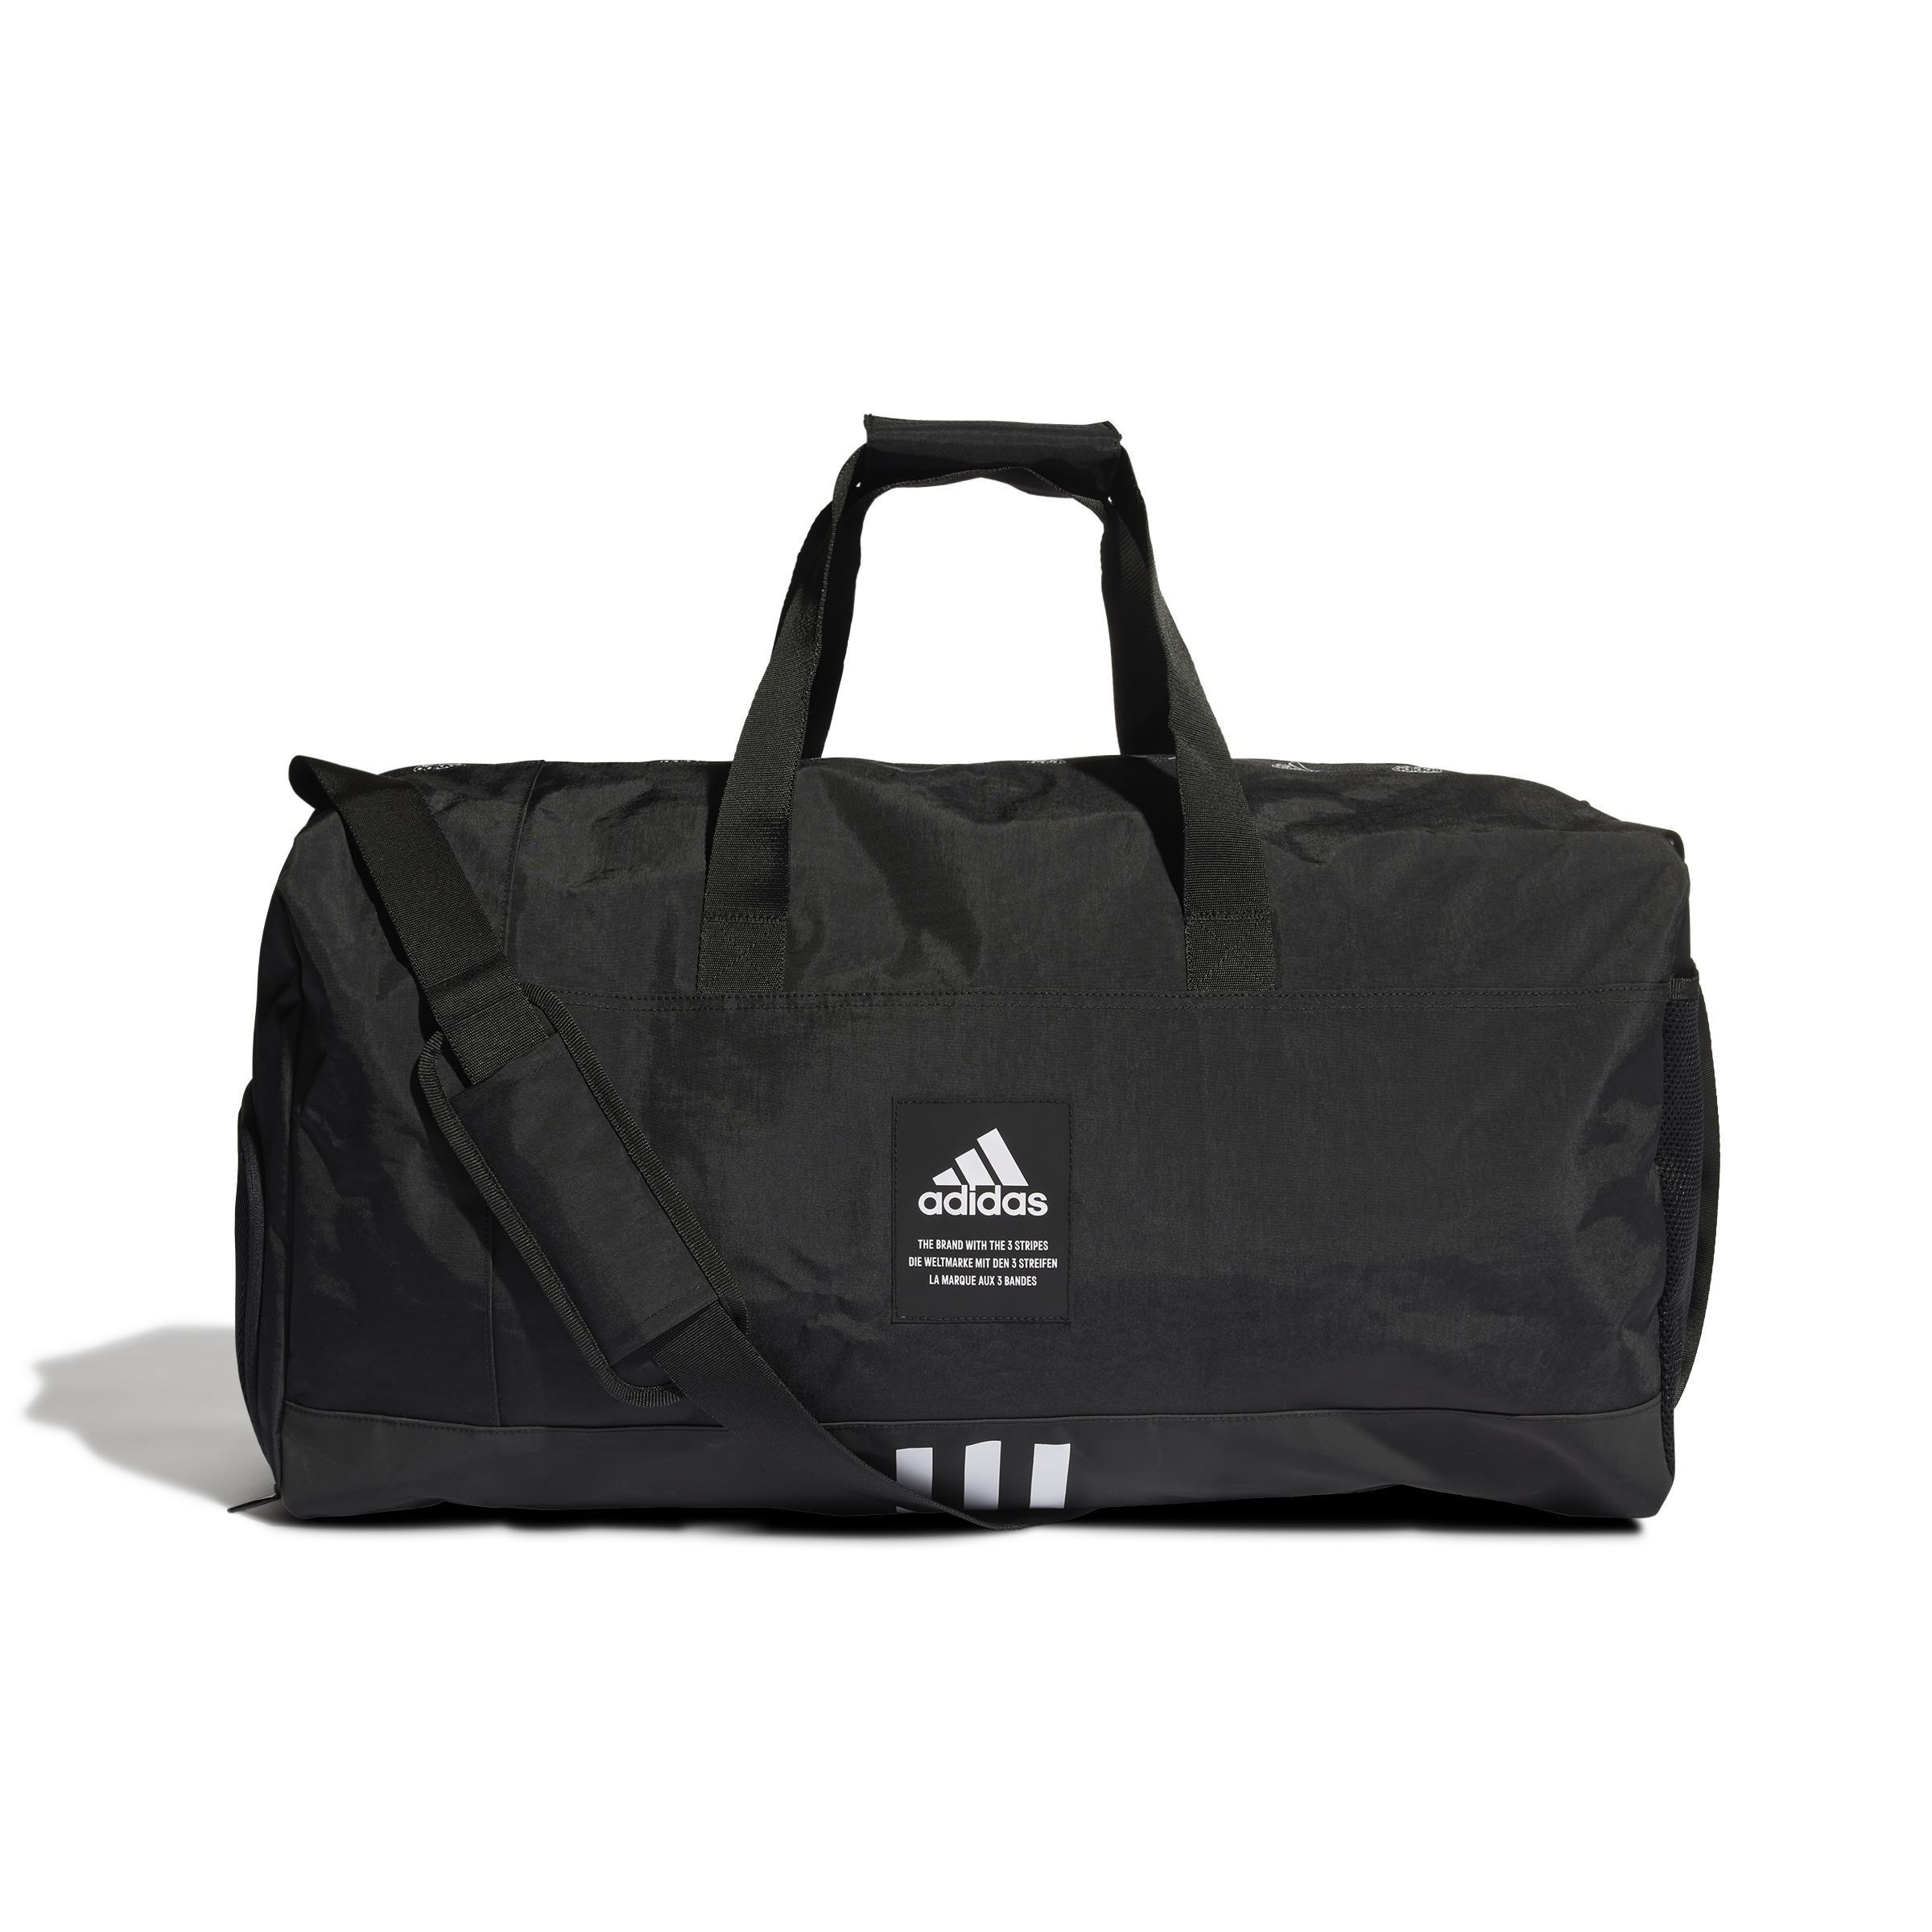 adidas - Unisex 4Athlts Duffel Bag Large, Black